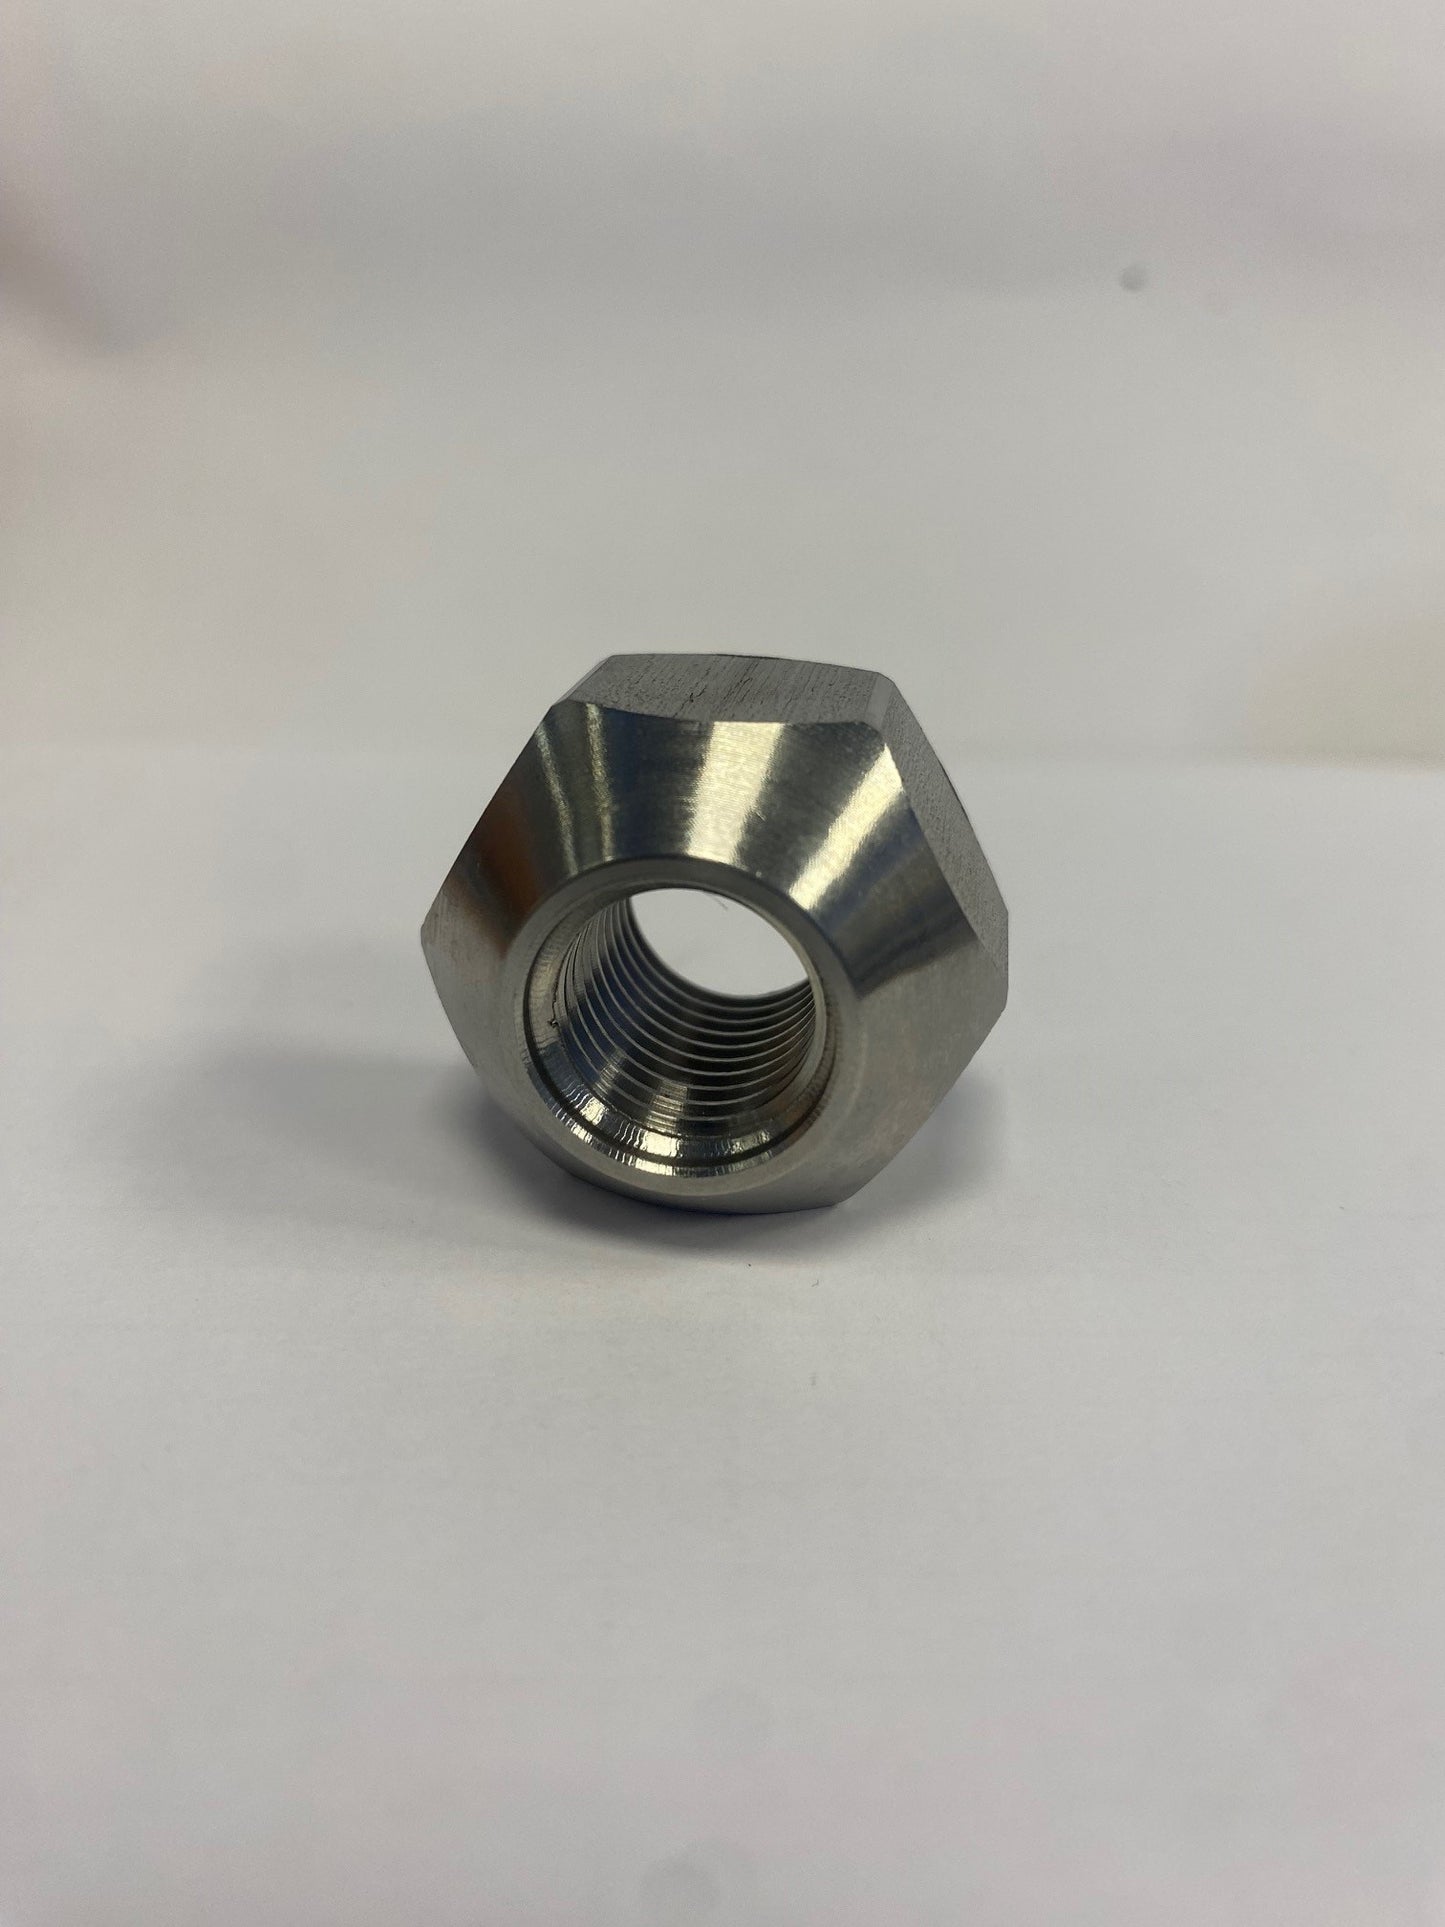 23 x Stainless Steel Wheel Nuts – Series 1, Series 2 & Series 2a-g. (3270)